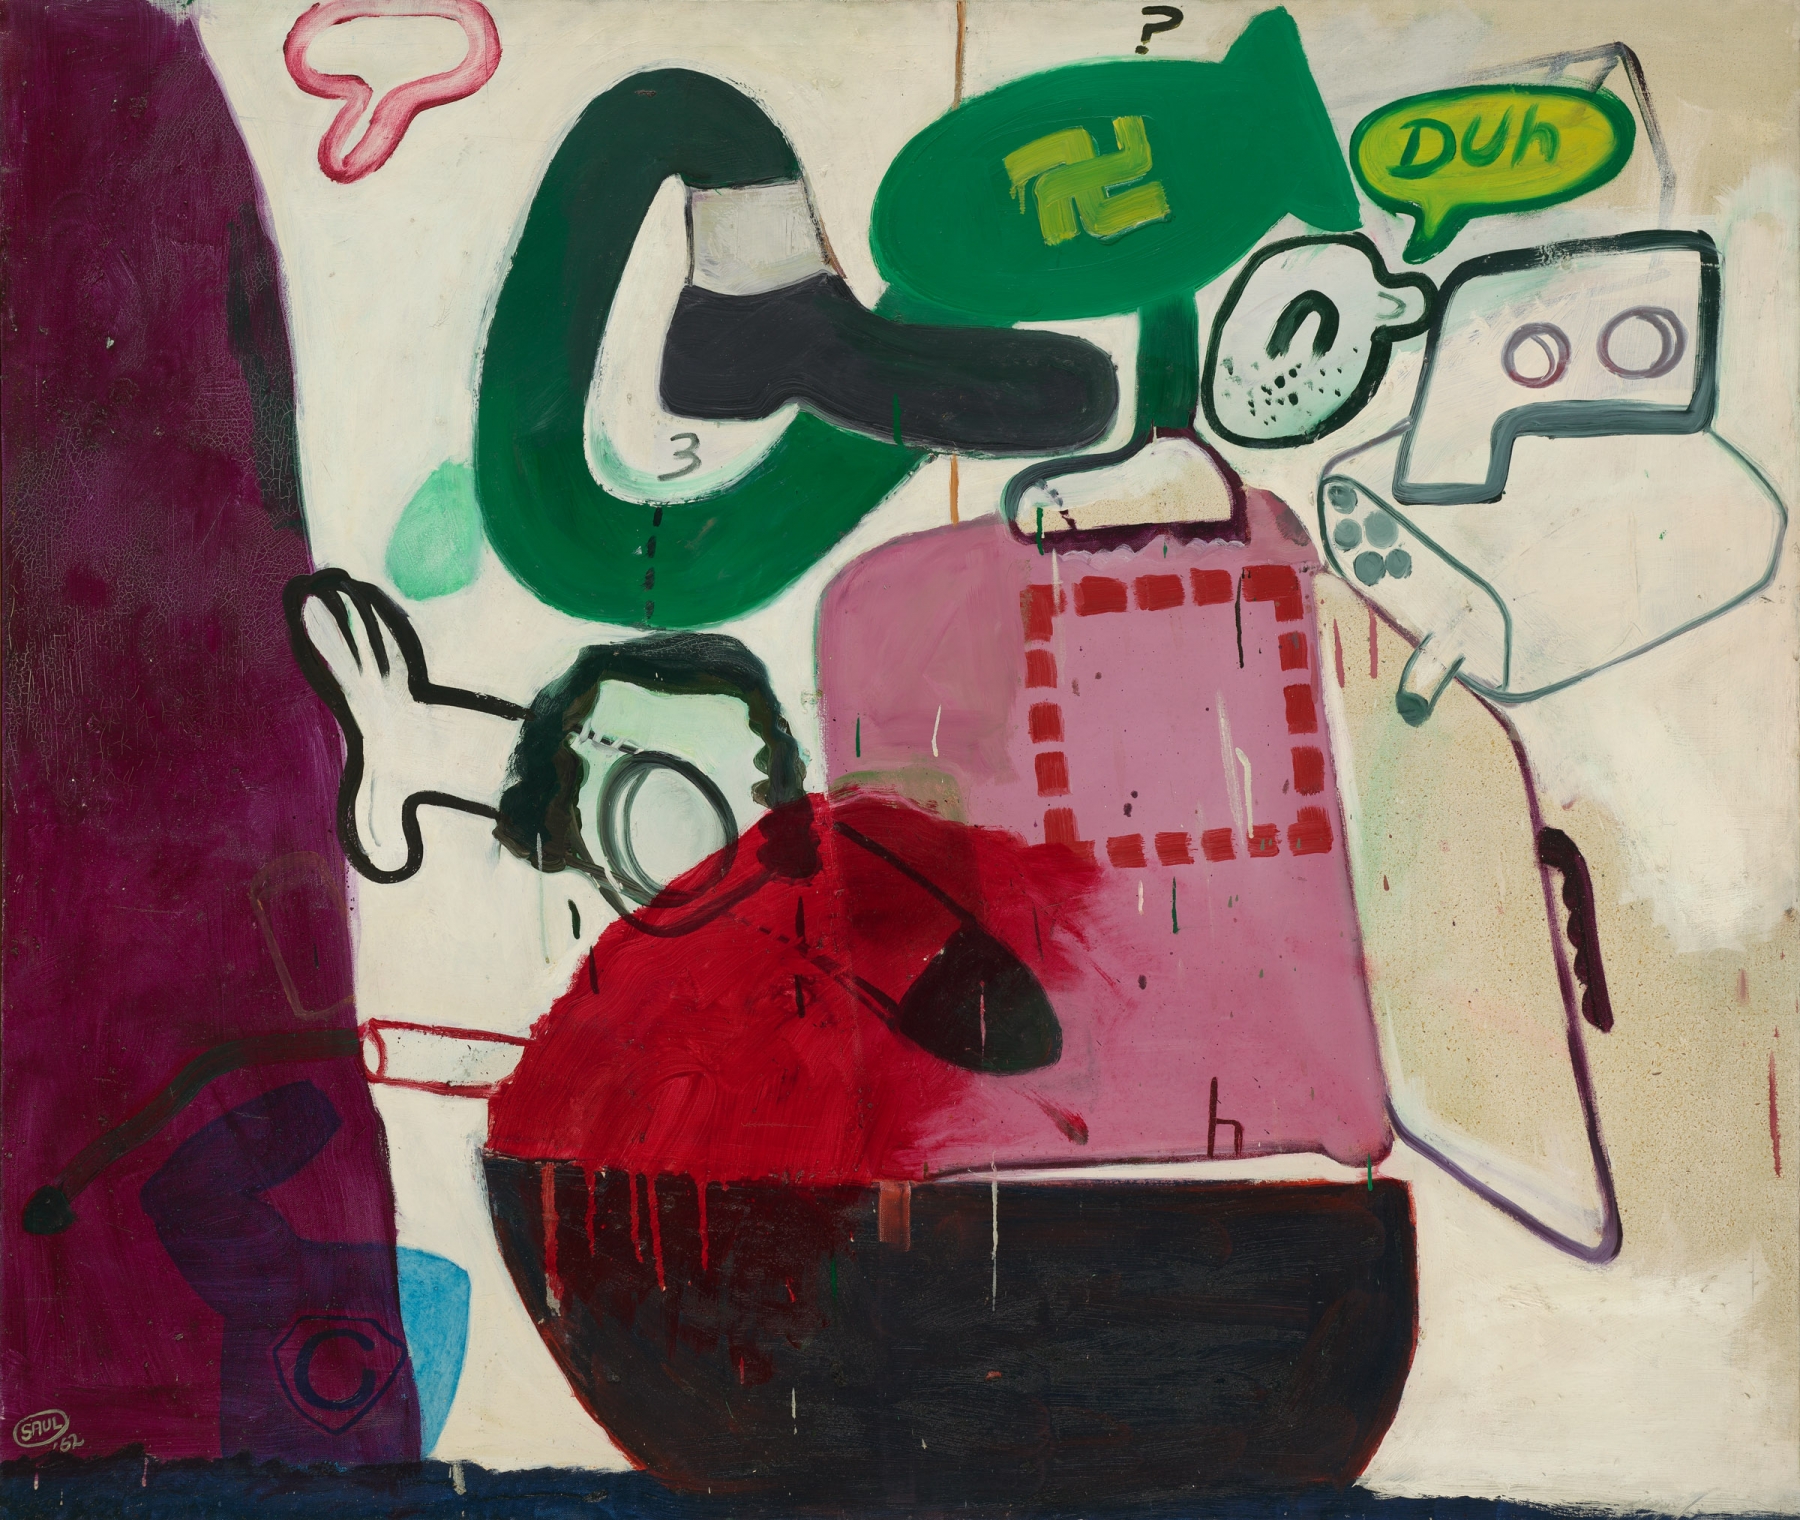 Peter Saul

&ldquo;Untitled&rdquo;, 1962

Oil on canvas

47 1/4 x 55 inches

120 x 140 cm

SAU 25